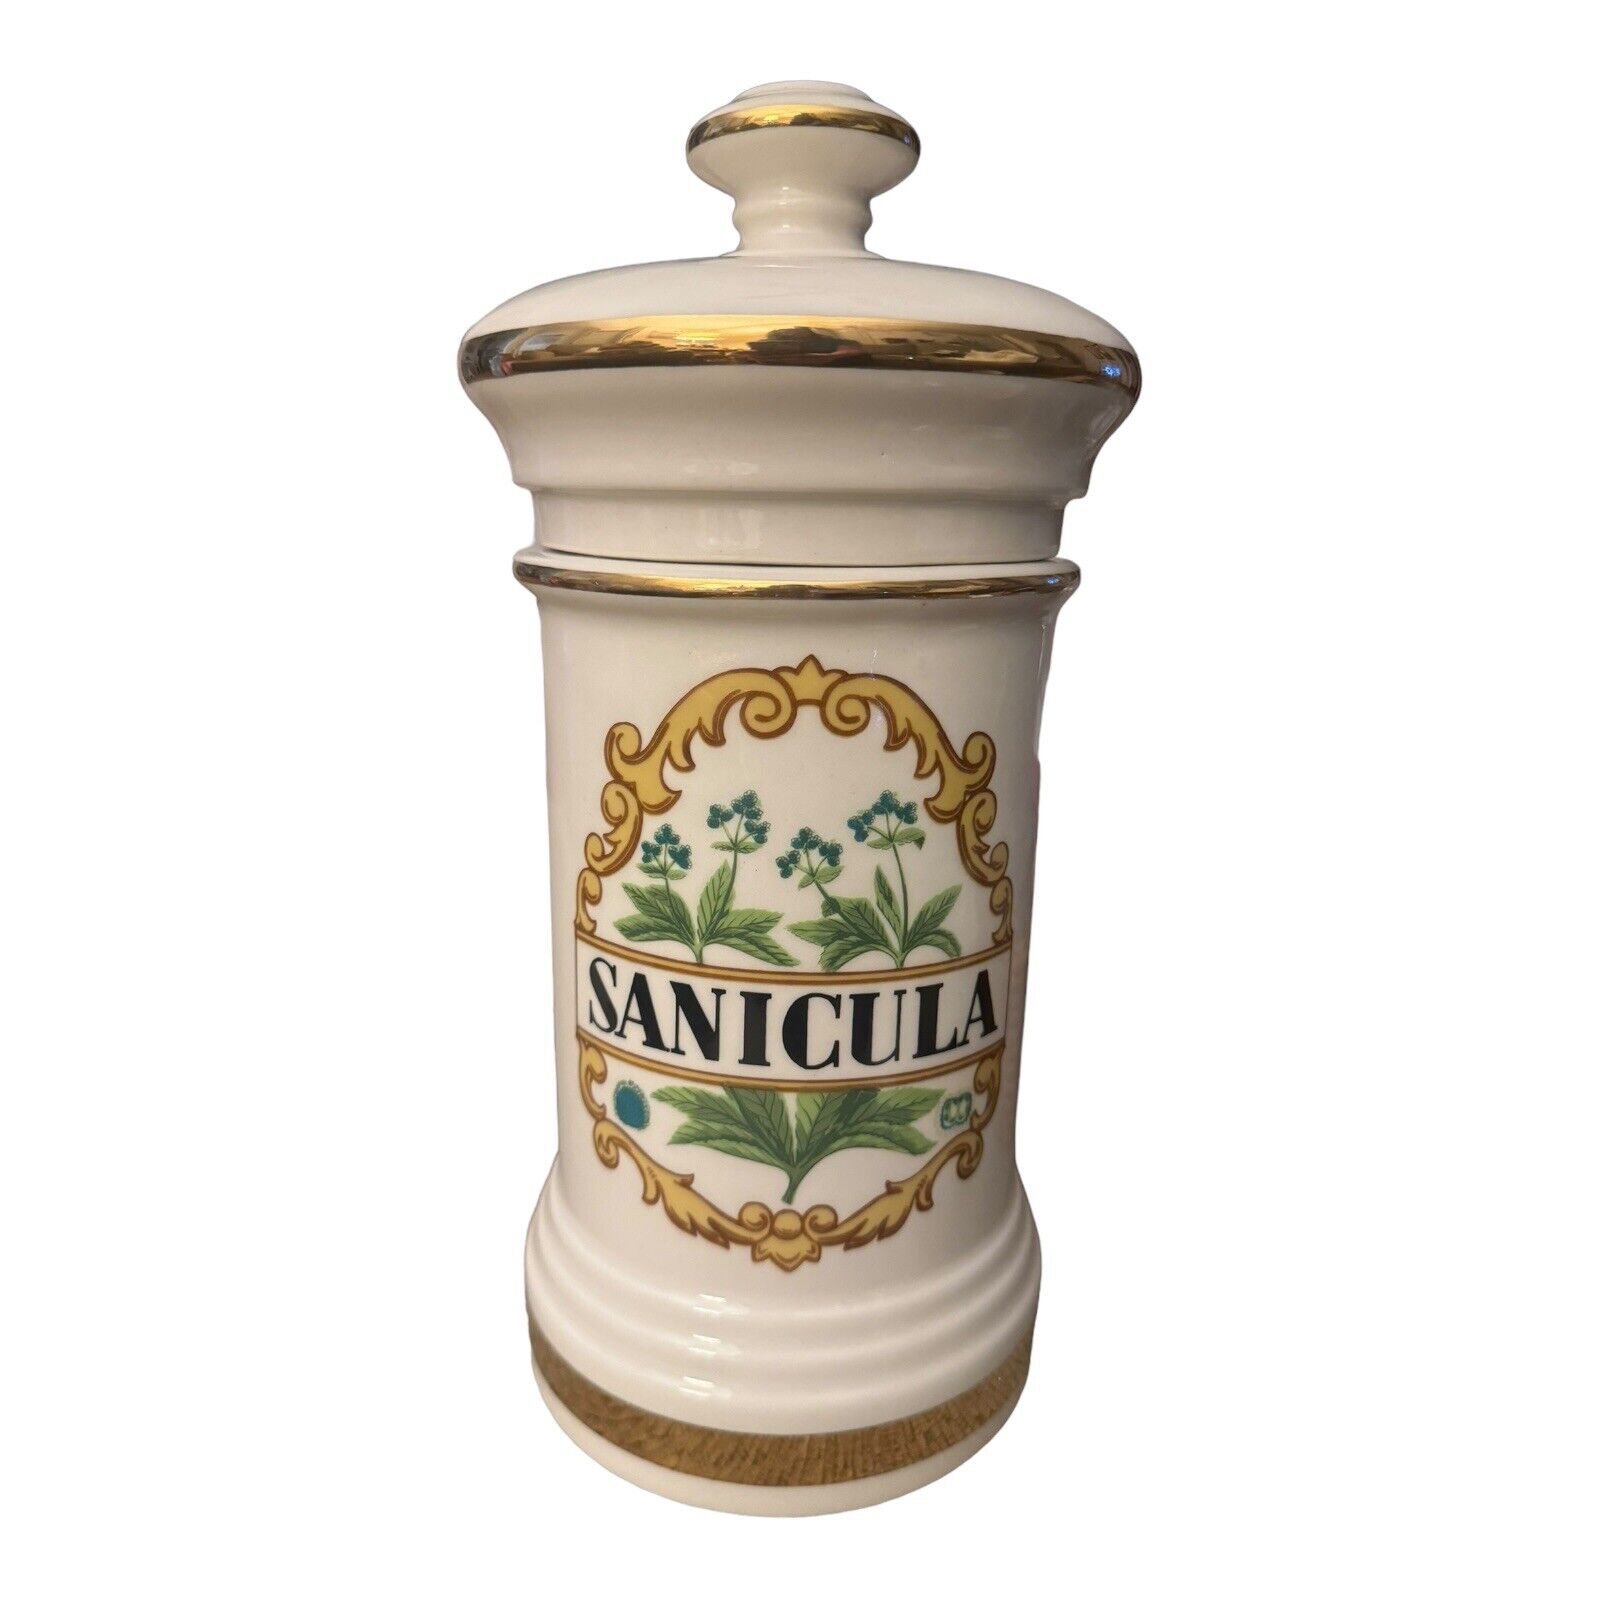 Vintage Sanicula Apothecary Jar Pharmacy Botanical Decorative